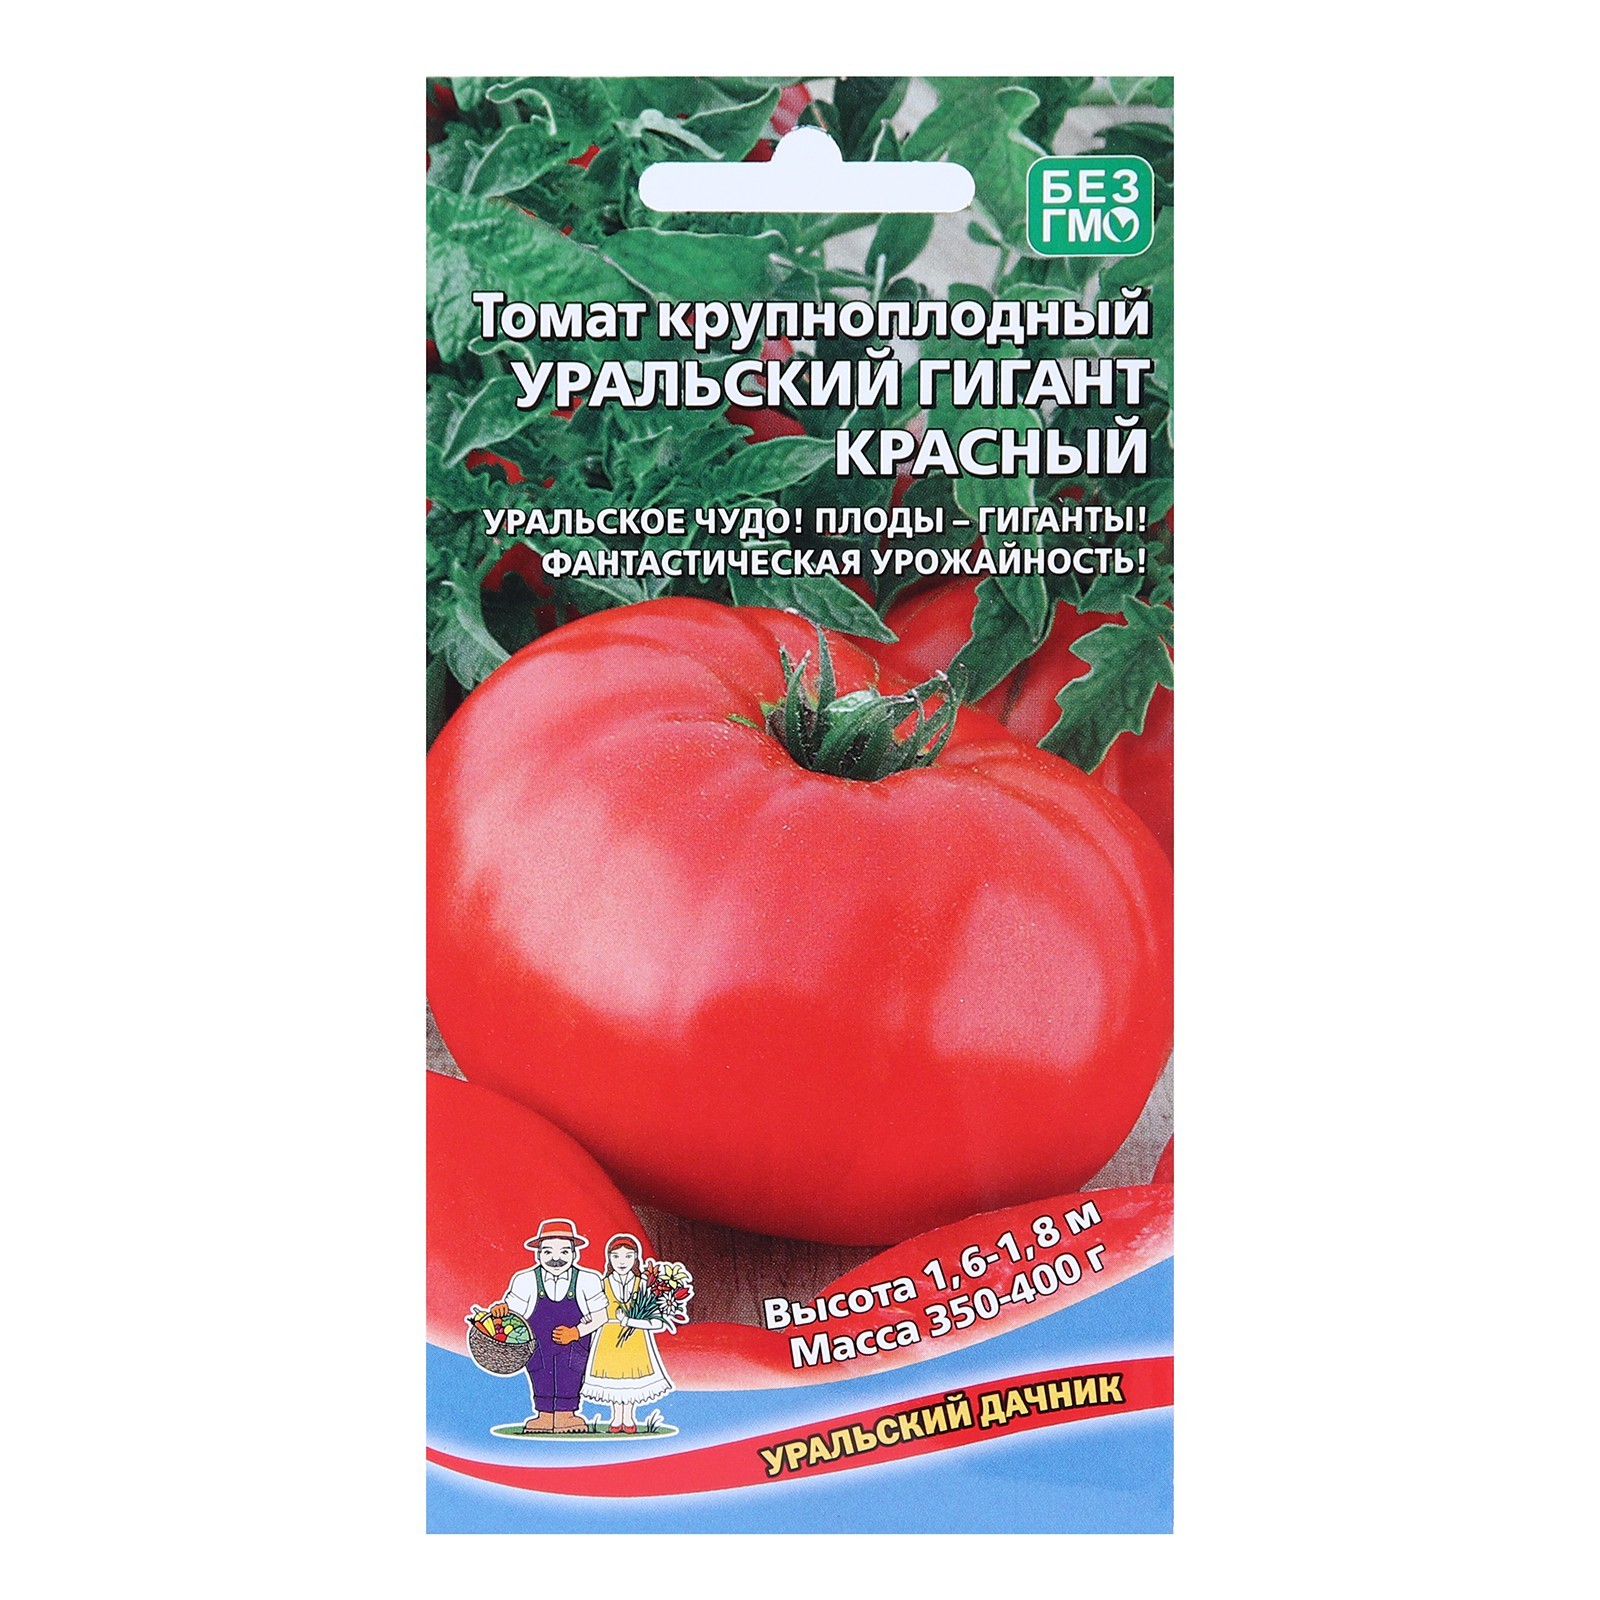 томат гигант бельгии характеристика и описание сорта